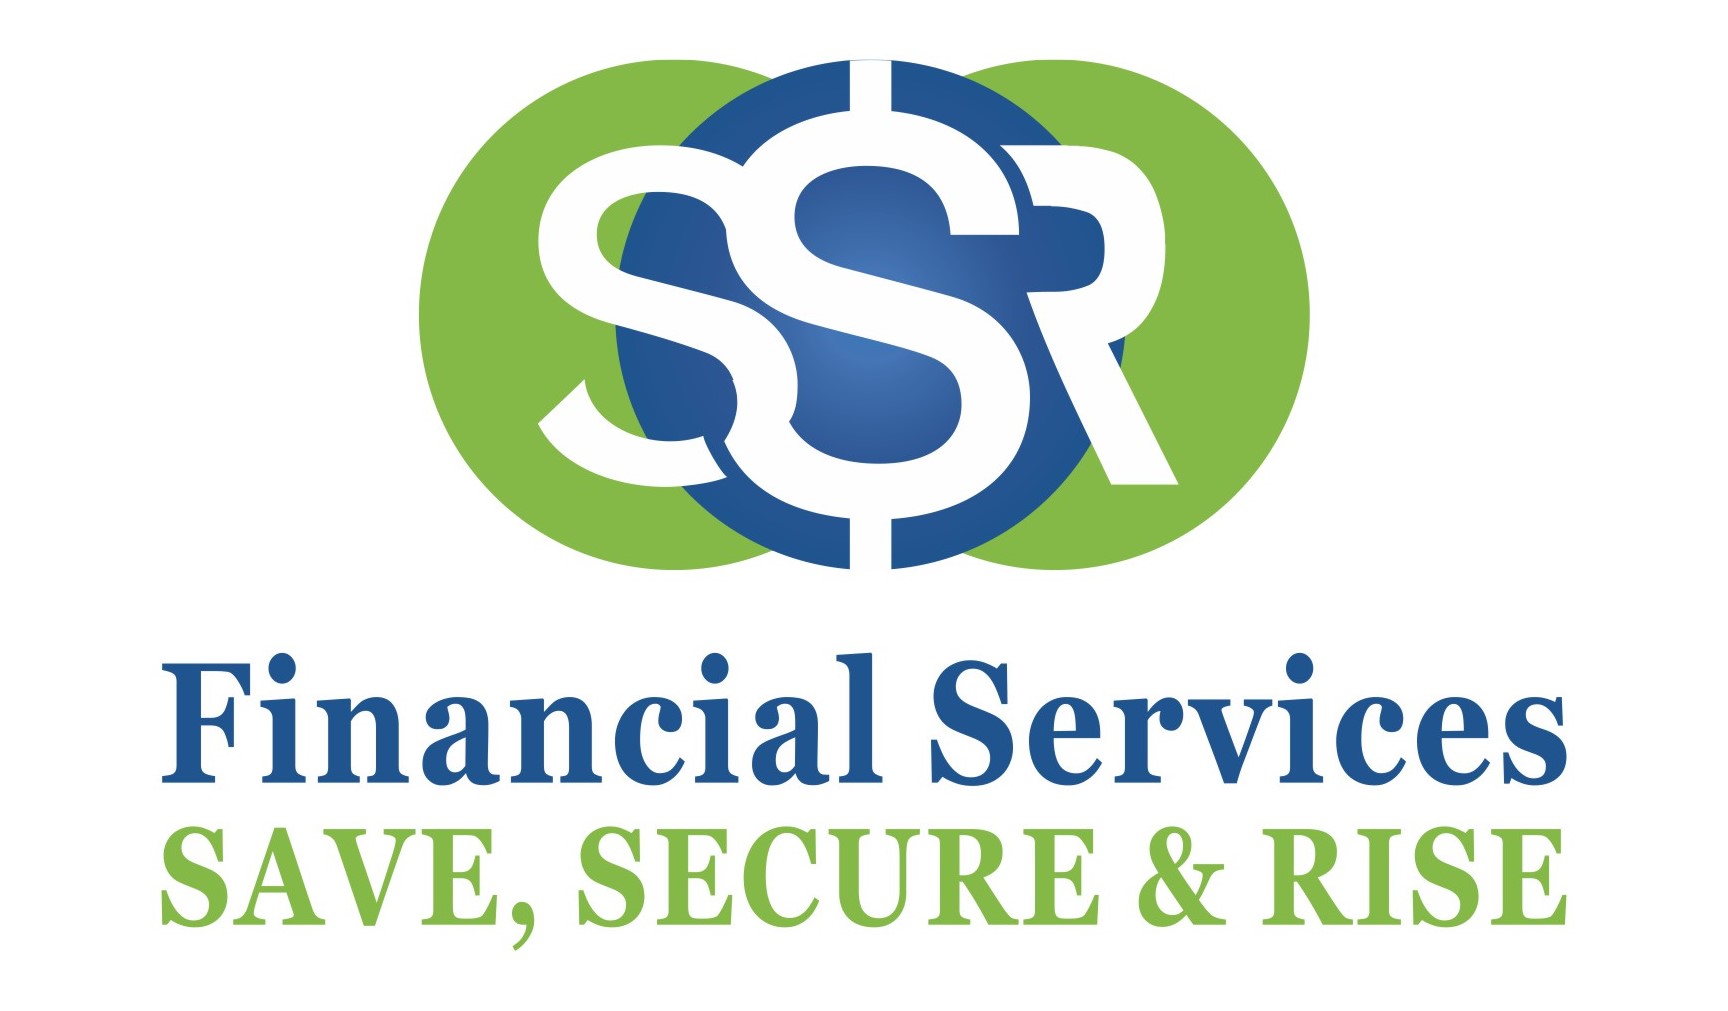 SSR Financial Services